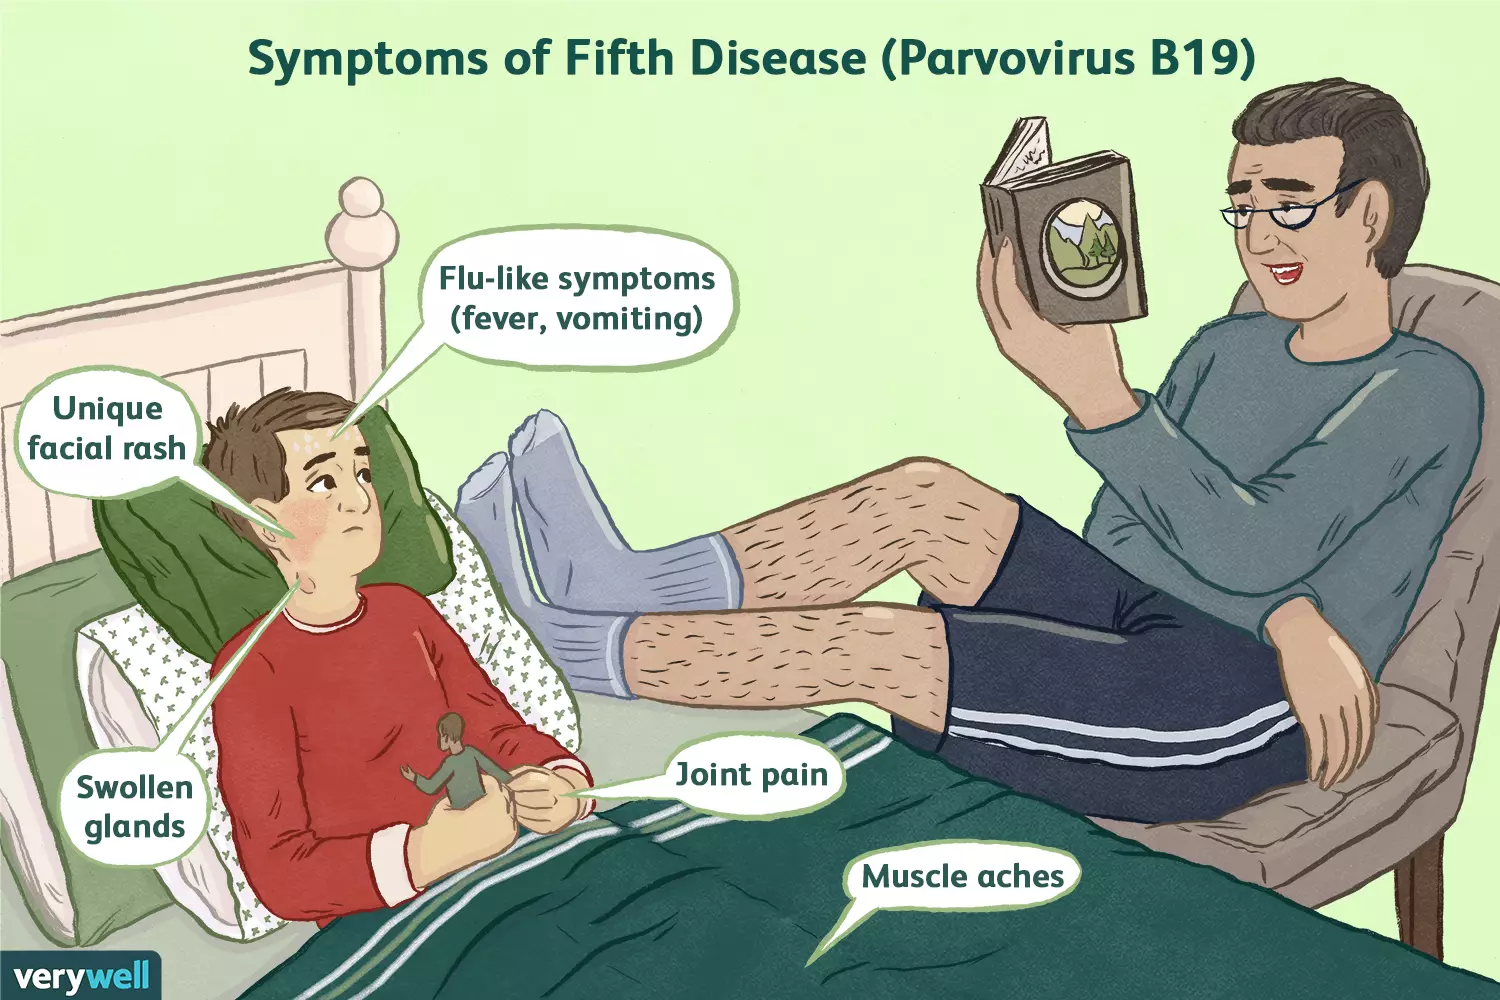 Symptoms of Fifth Disease (Parvovirus B19)